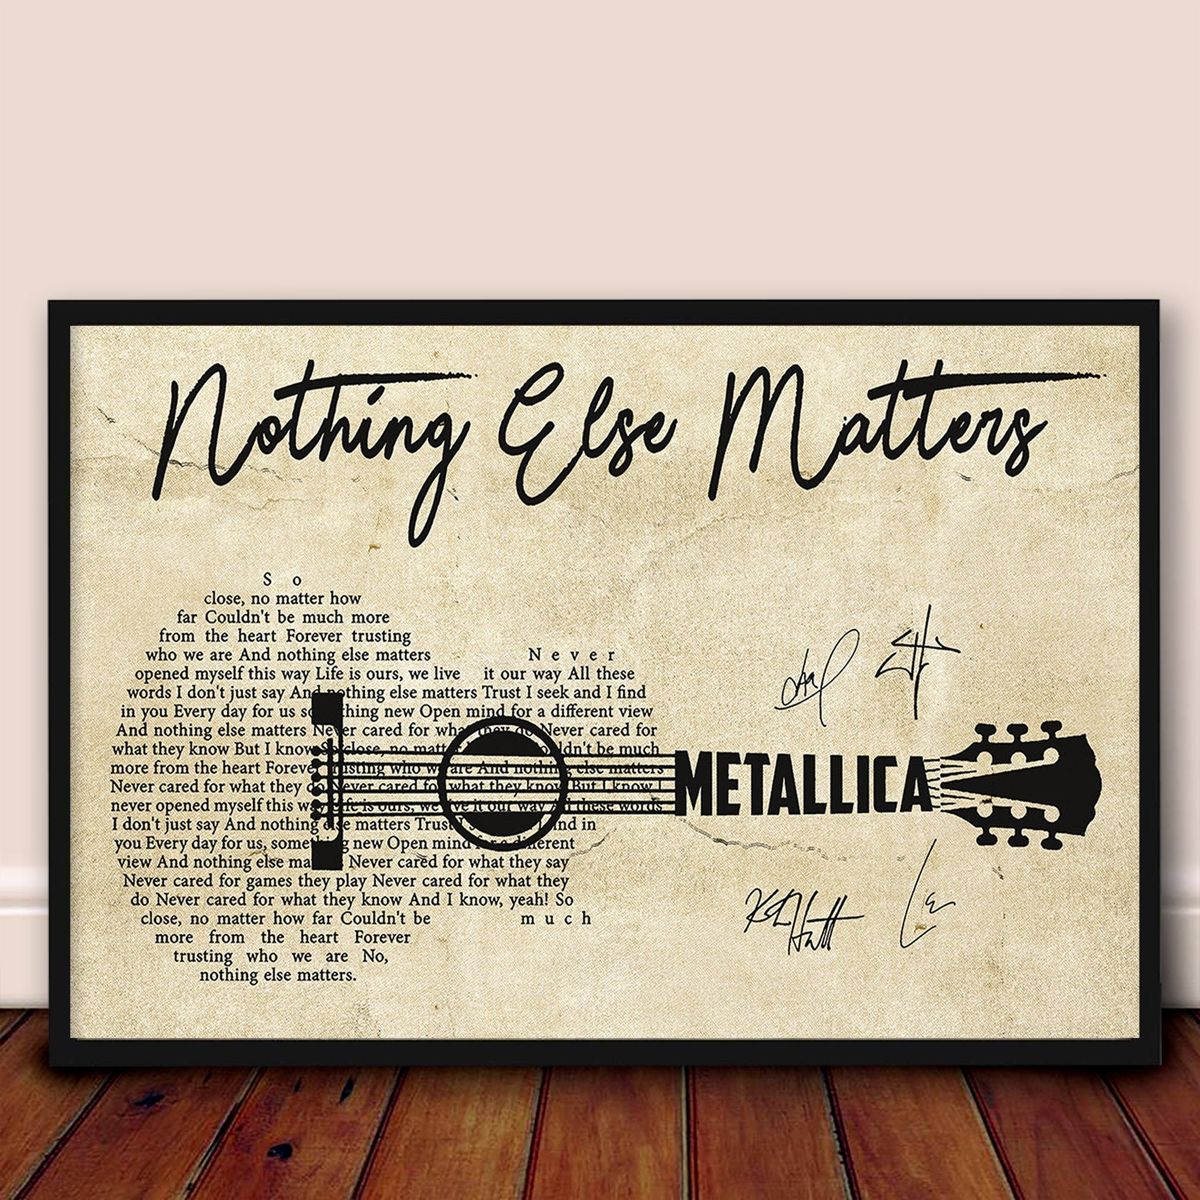 Metallica matters текст. Металлика nothing. Metallica nothing else matters текст. Текст металлика nothing else matters. Металлика nothing текст.